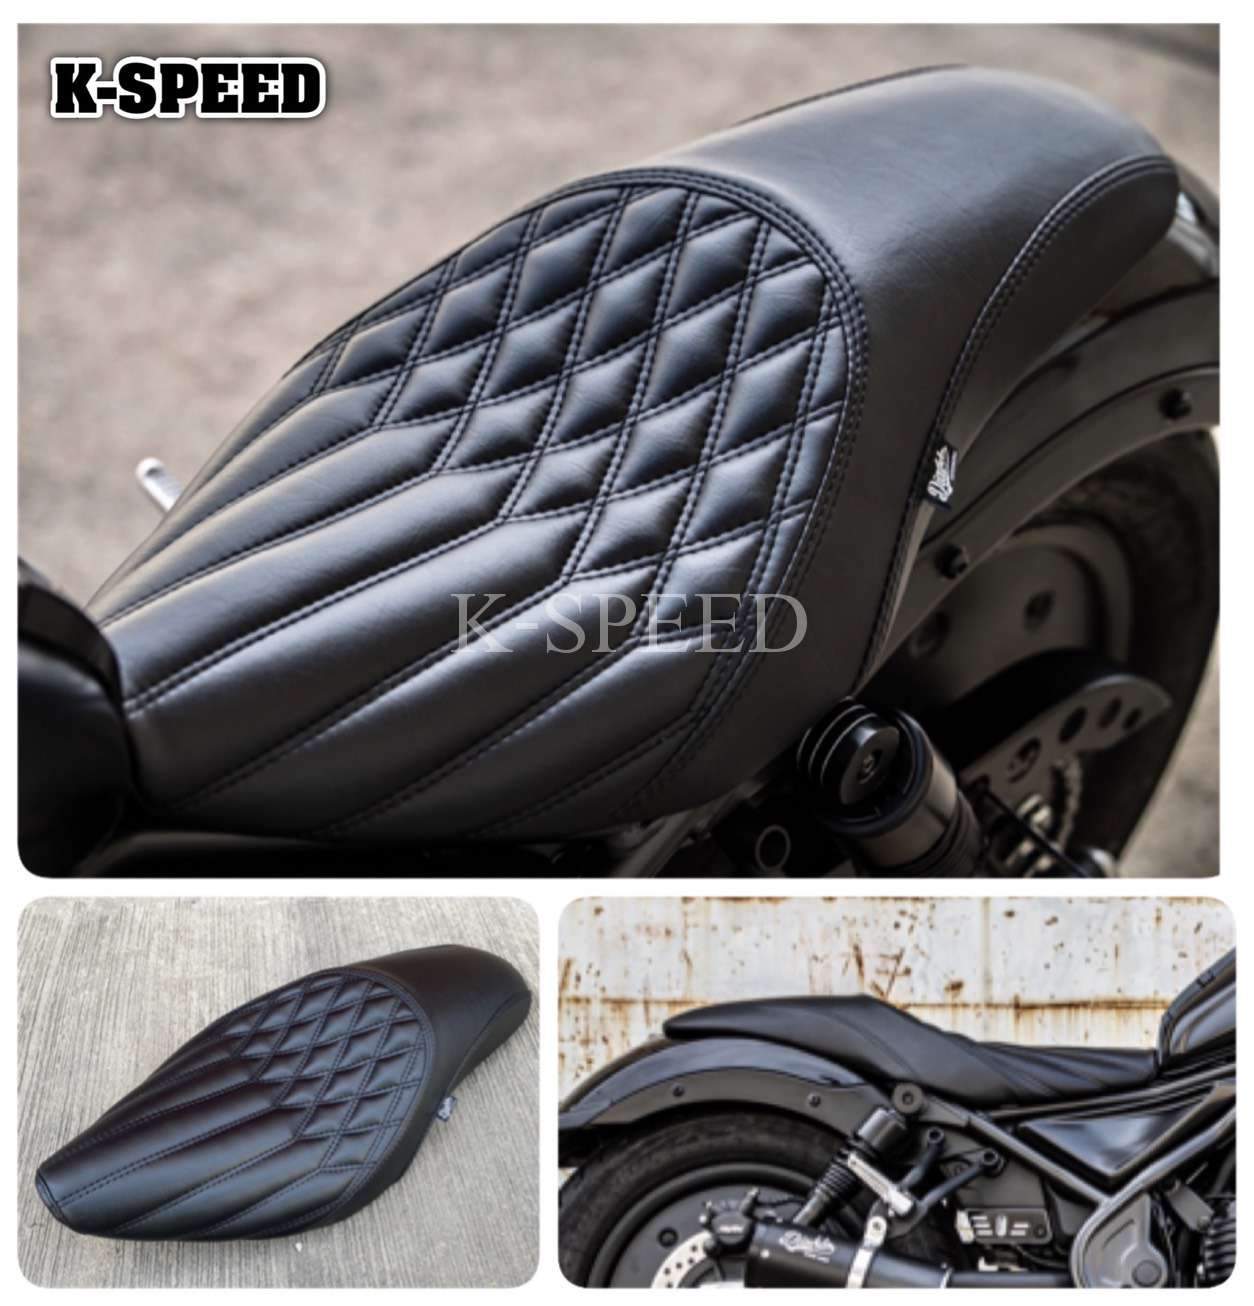 K-speed レブル250 500 テールライトK-SPEED-RB0014